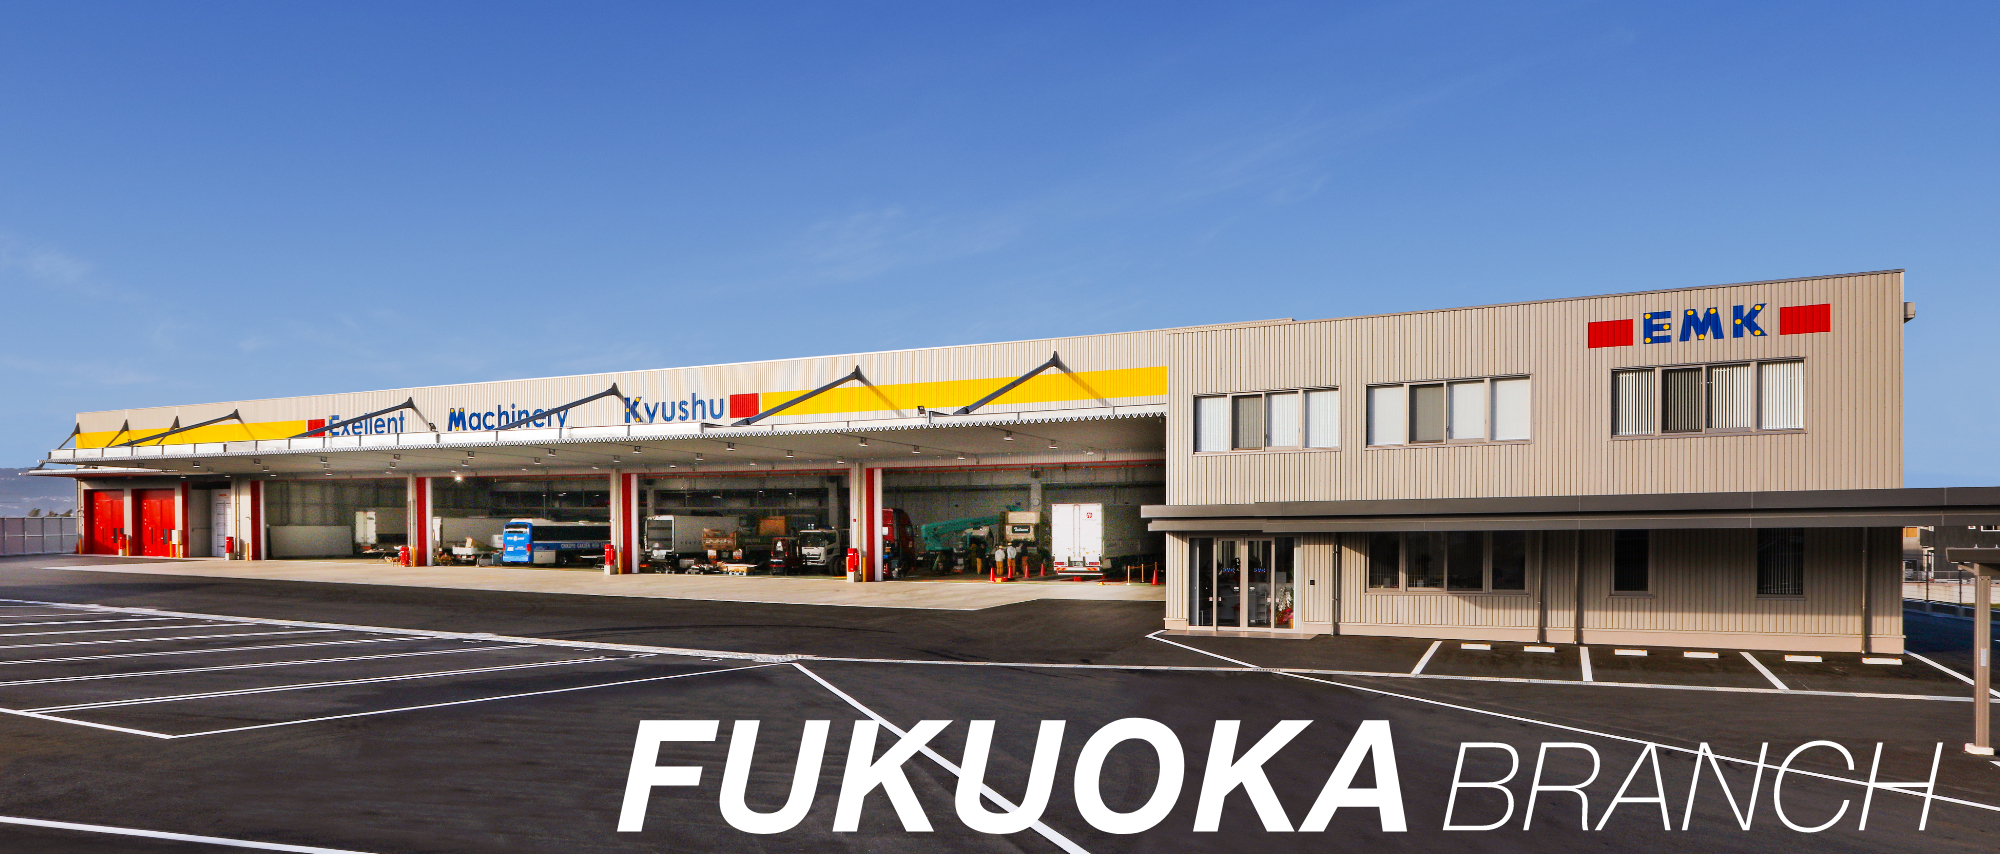 EMK 福岡支店